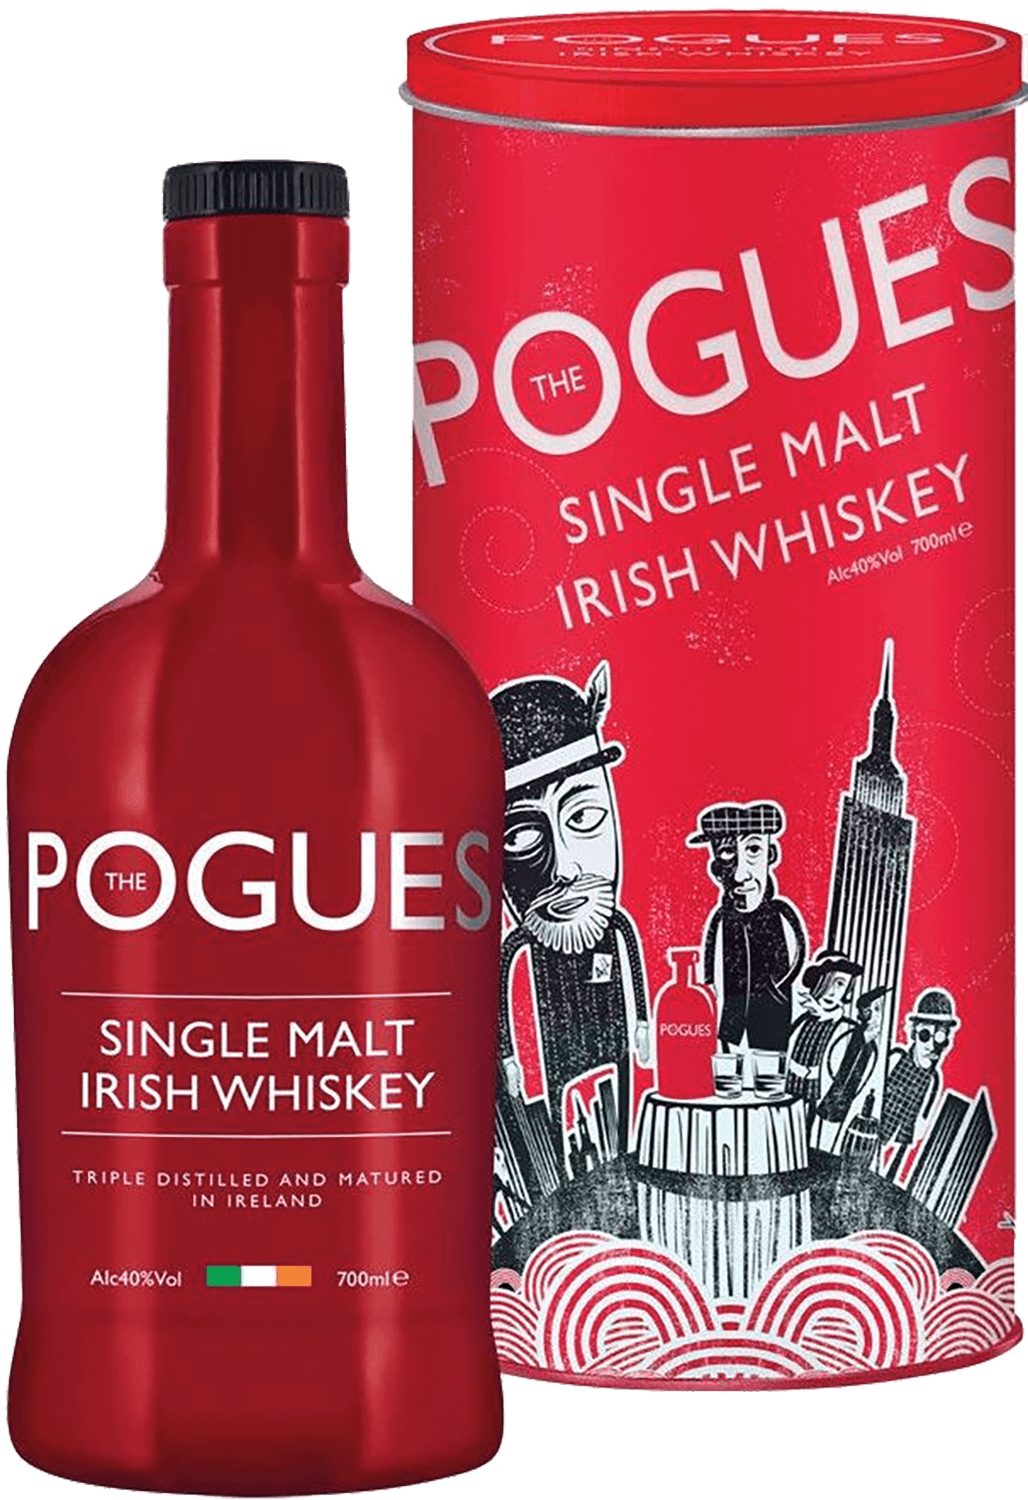 Pogues Single Malt Irish Whiskey (gift box) west cork small batch calvados cask finished single malt irish whiskey